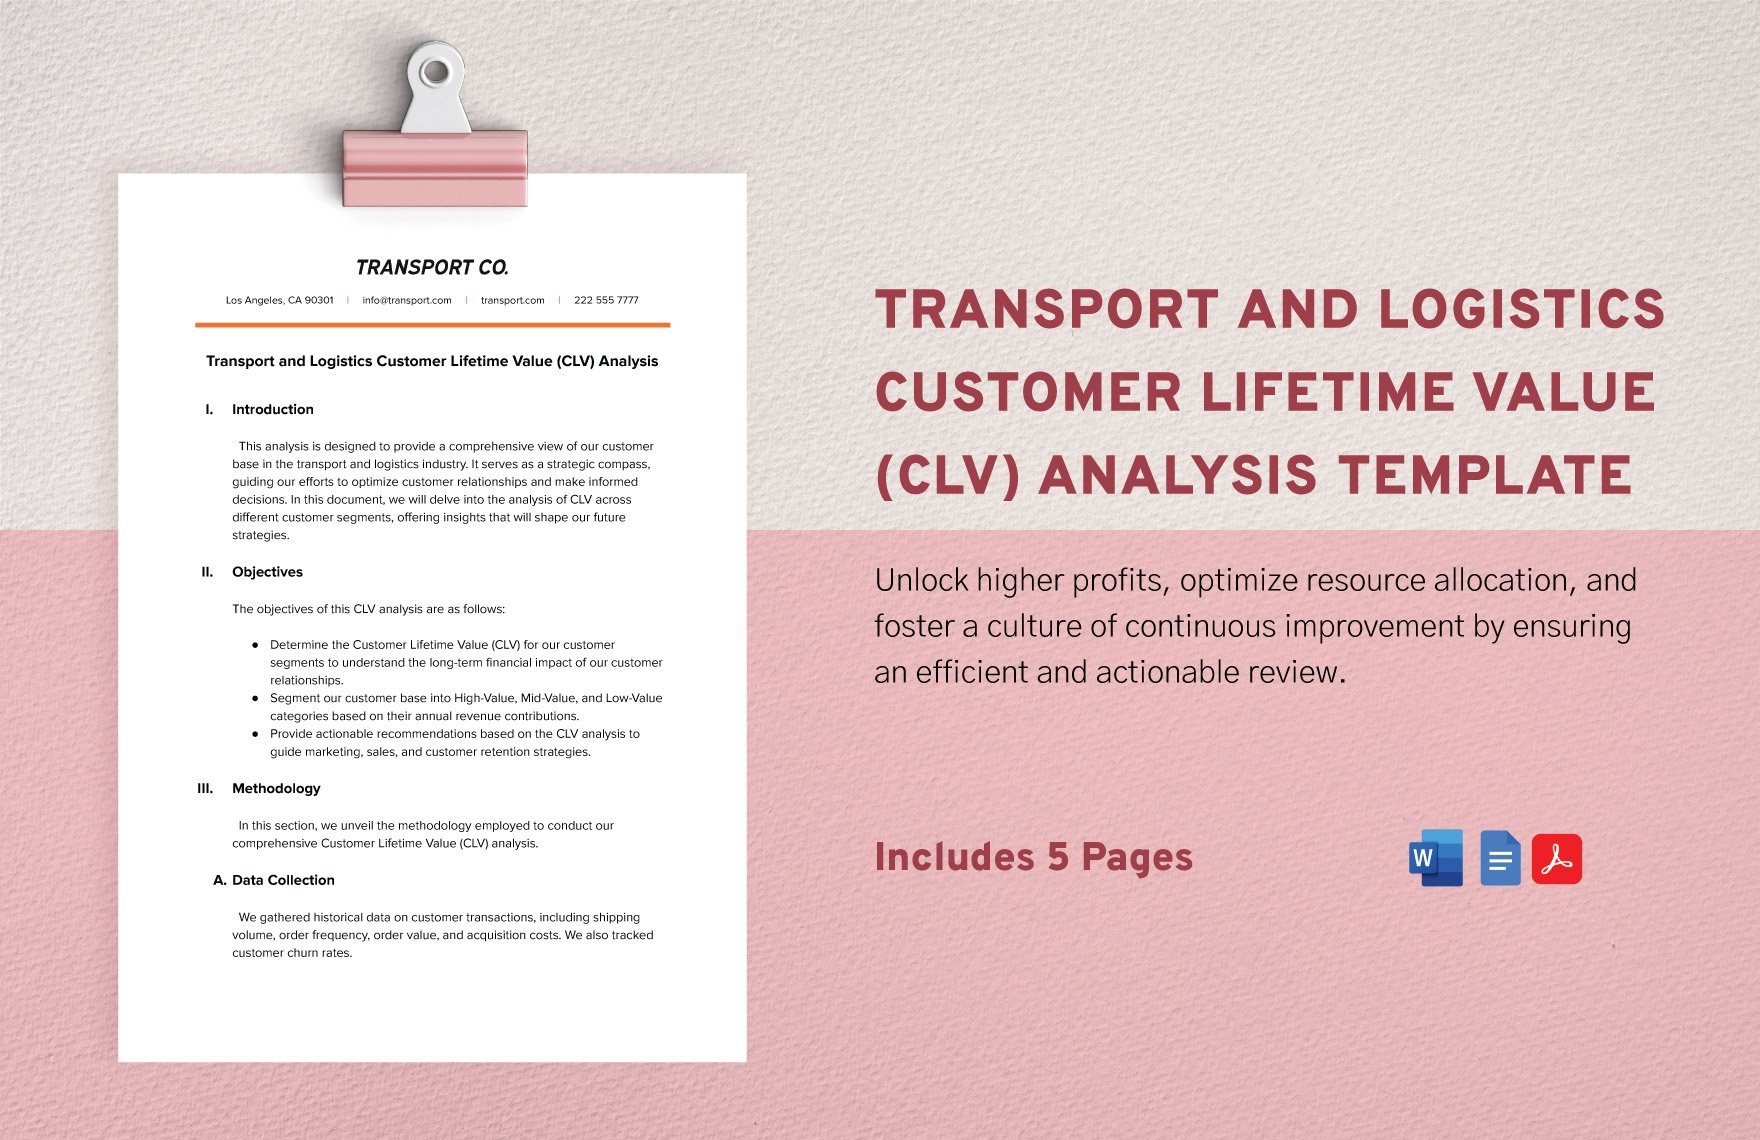 Transport and Logistics Customer Lifetime Value (CLV) Analysis Template